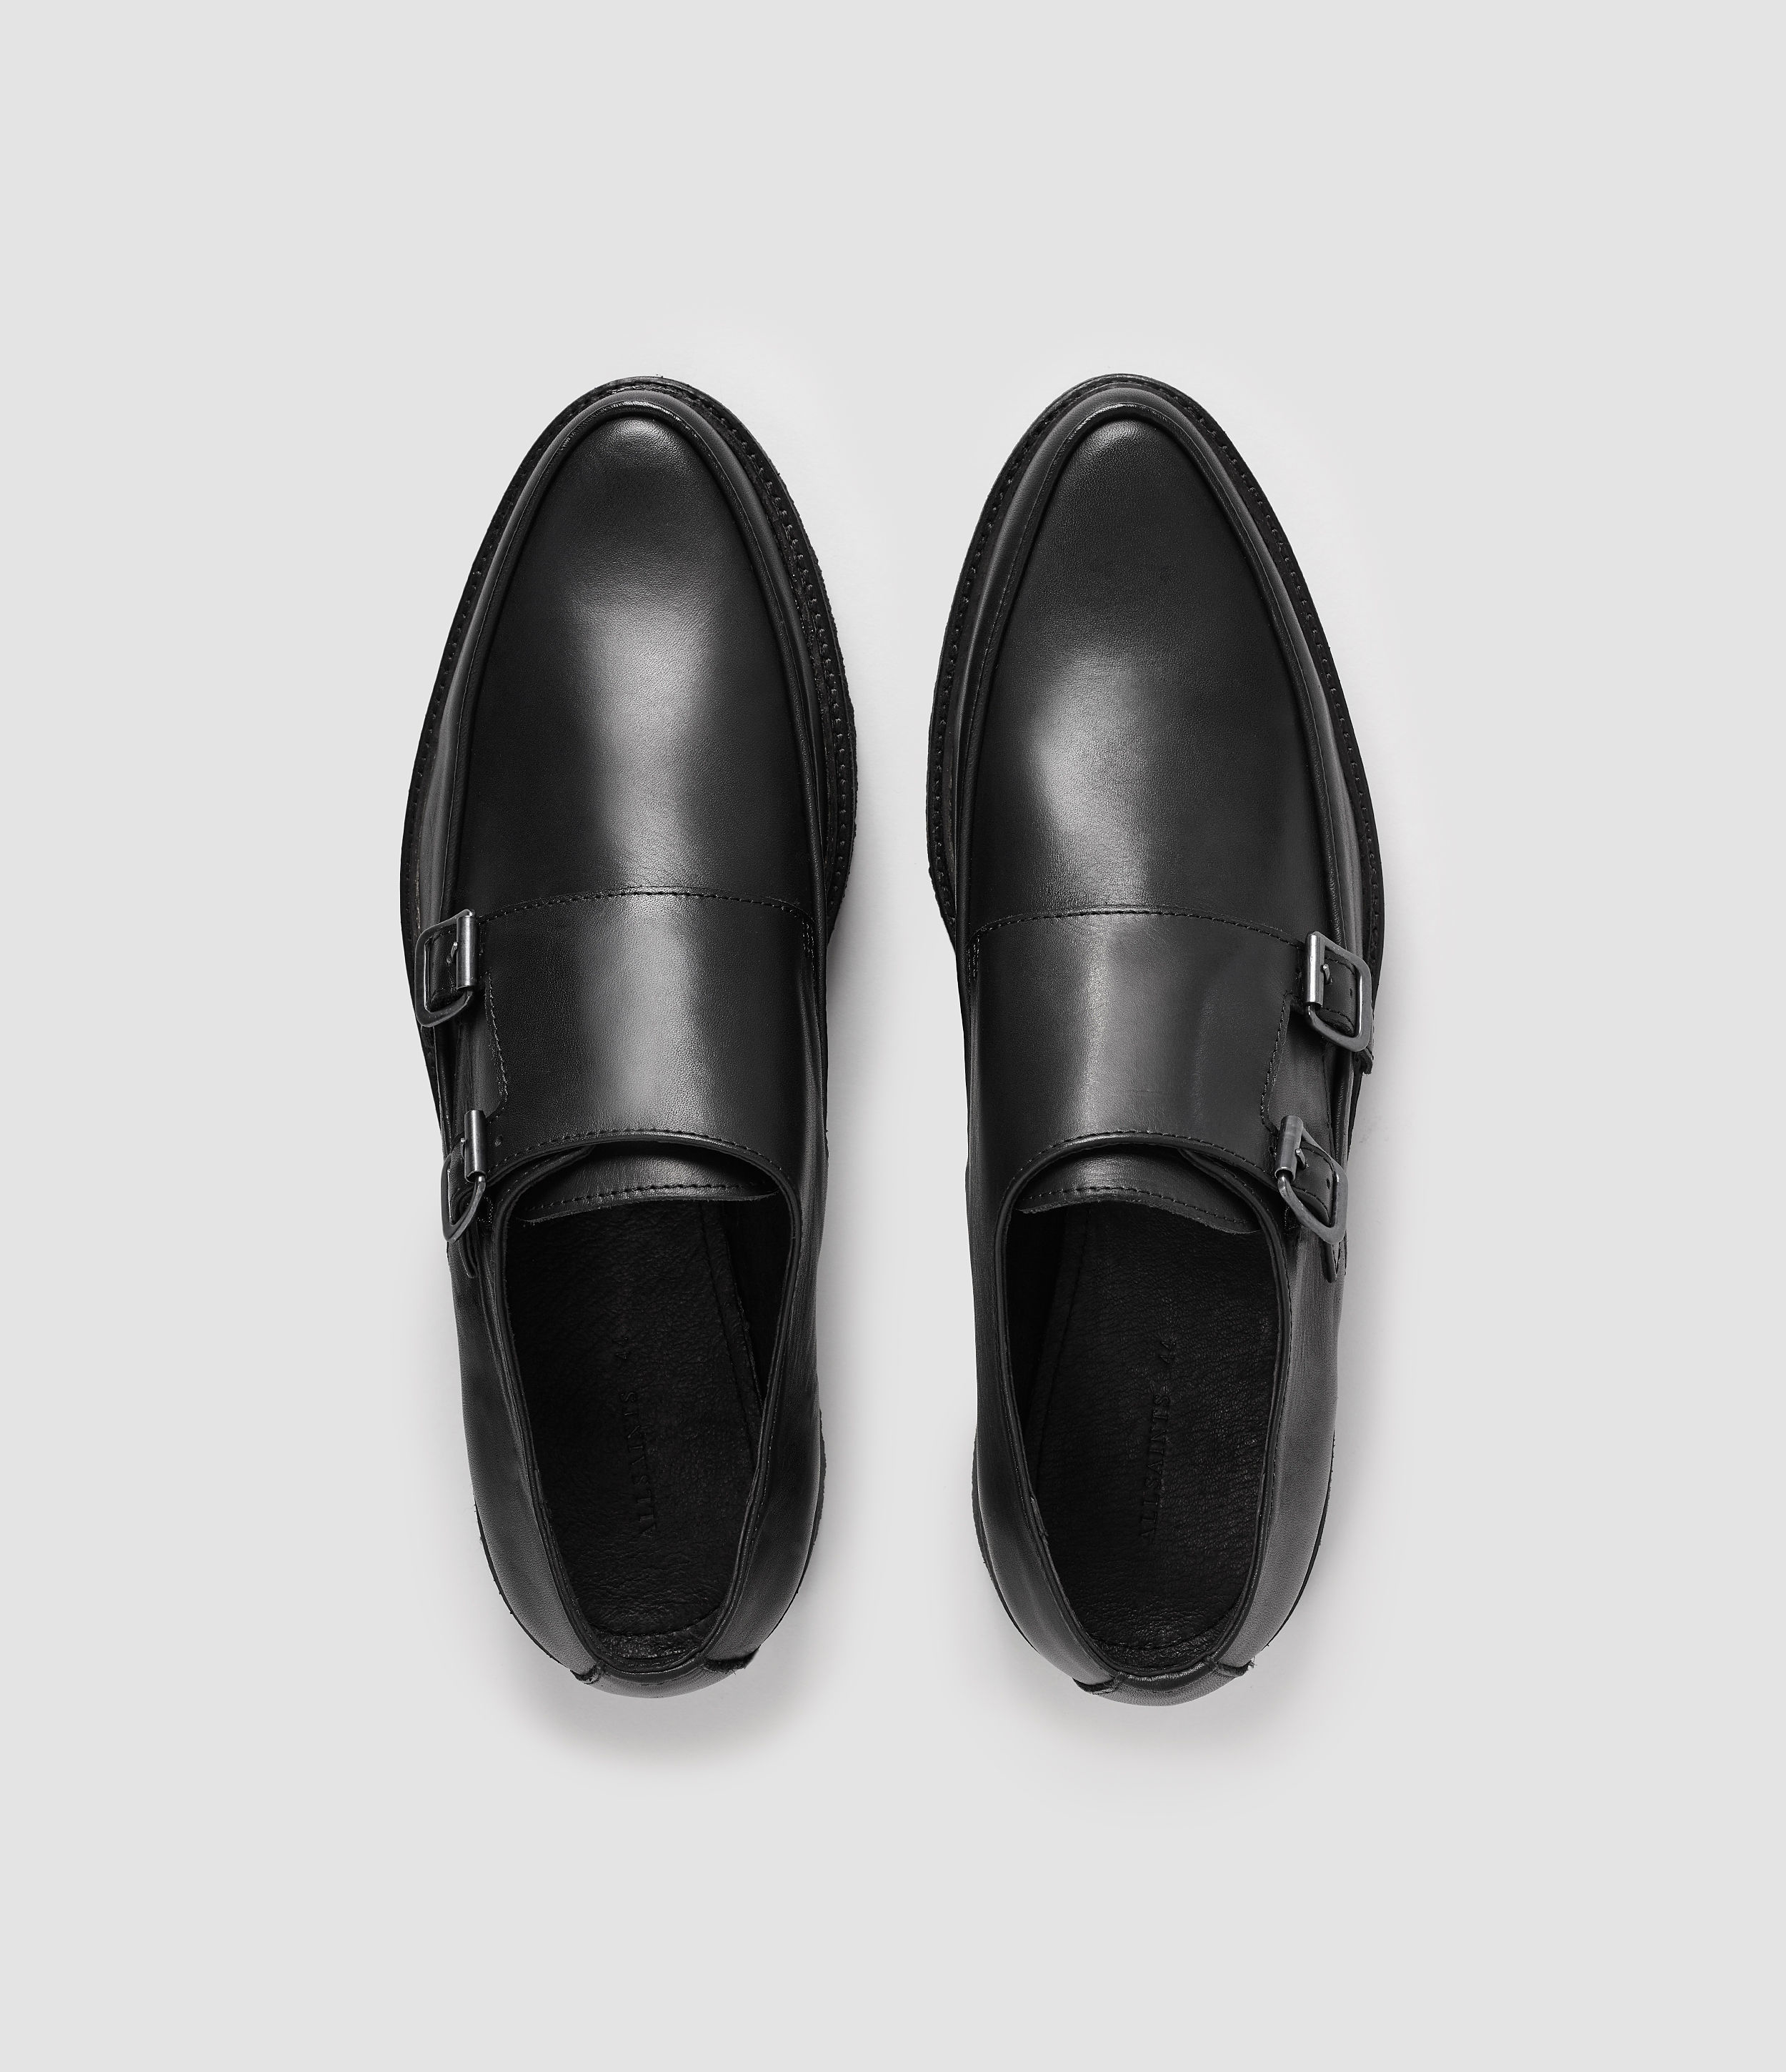 Lyst - Allsaints Alias Shoe Usa Usa in Black for Men